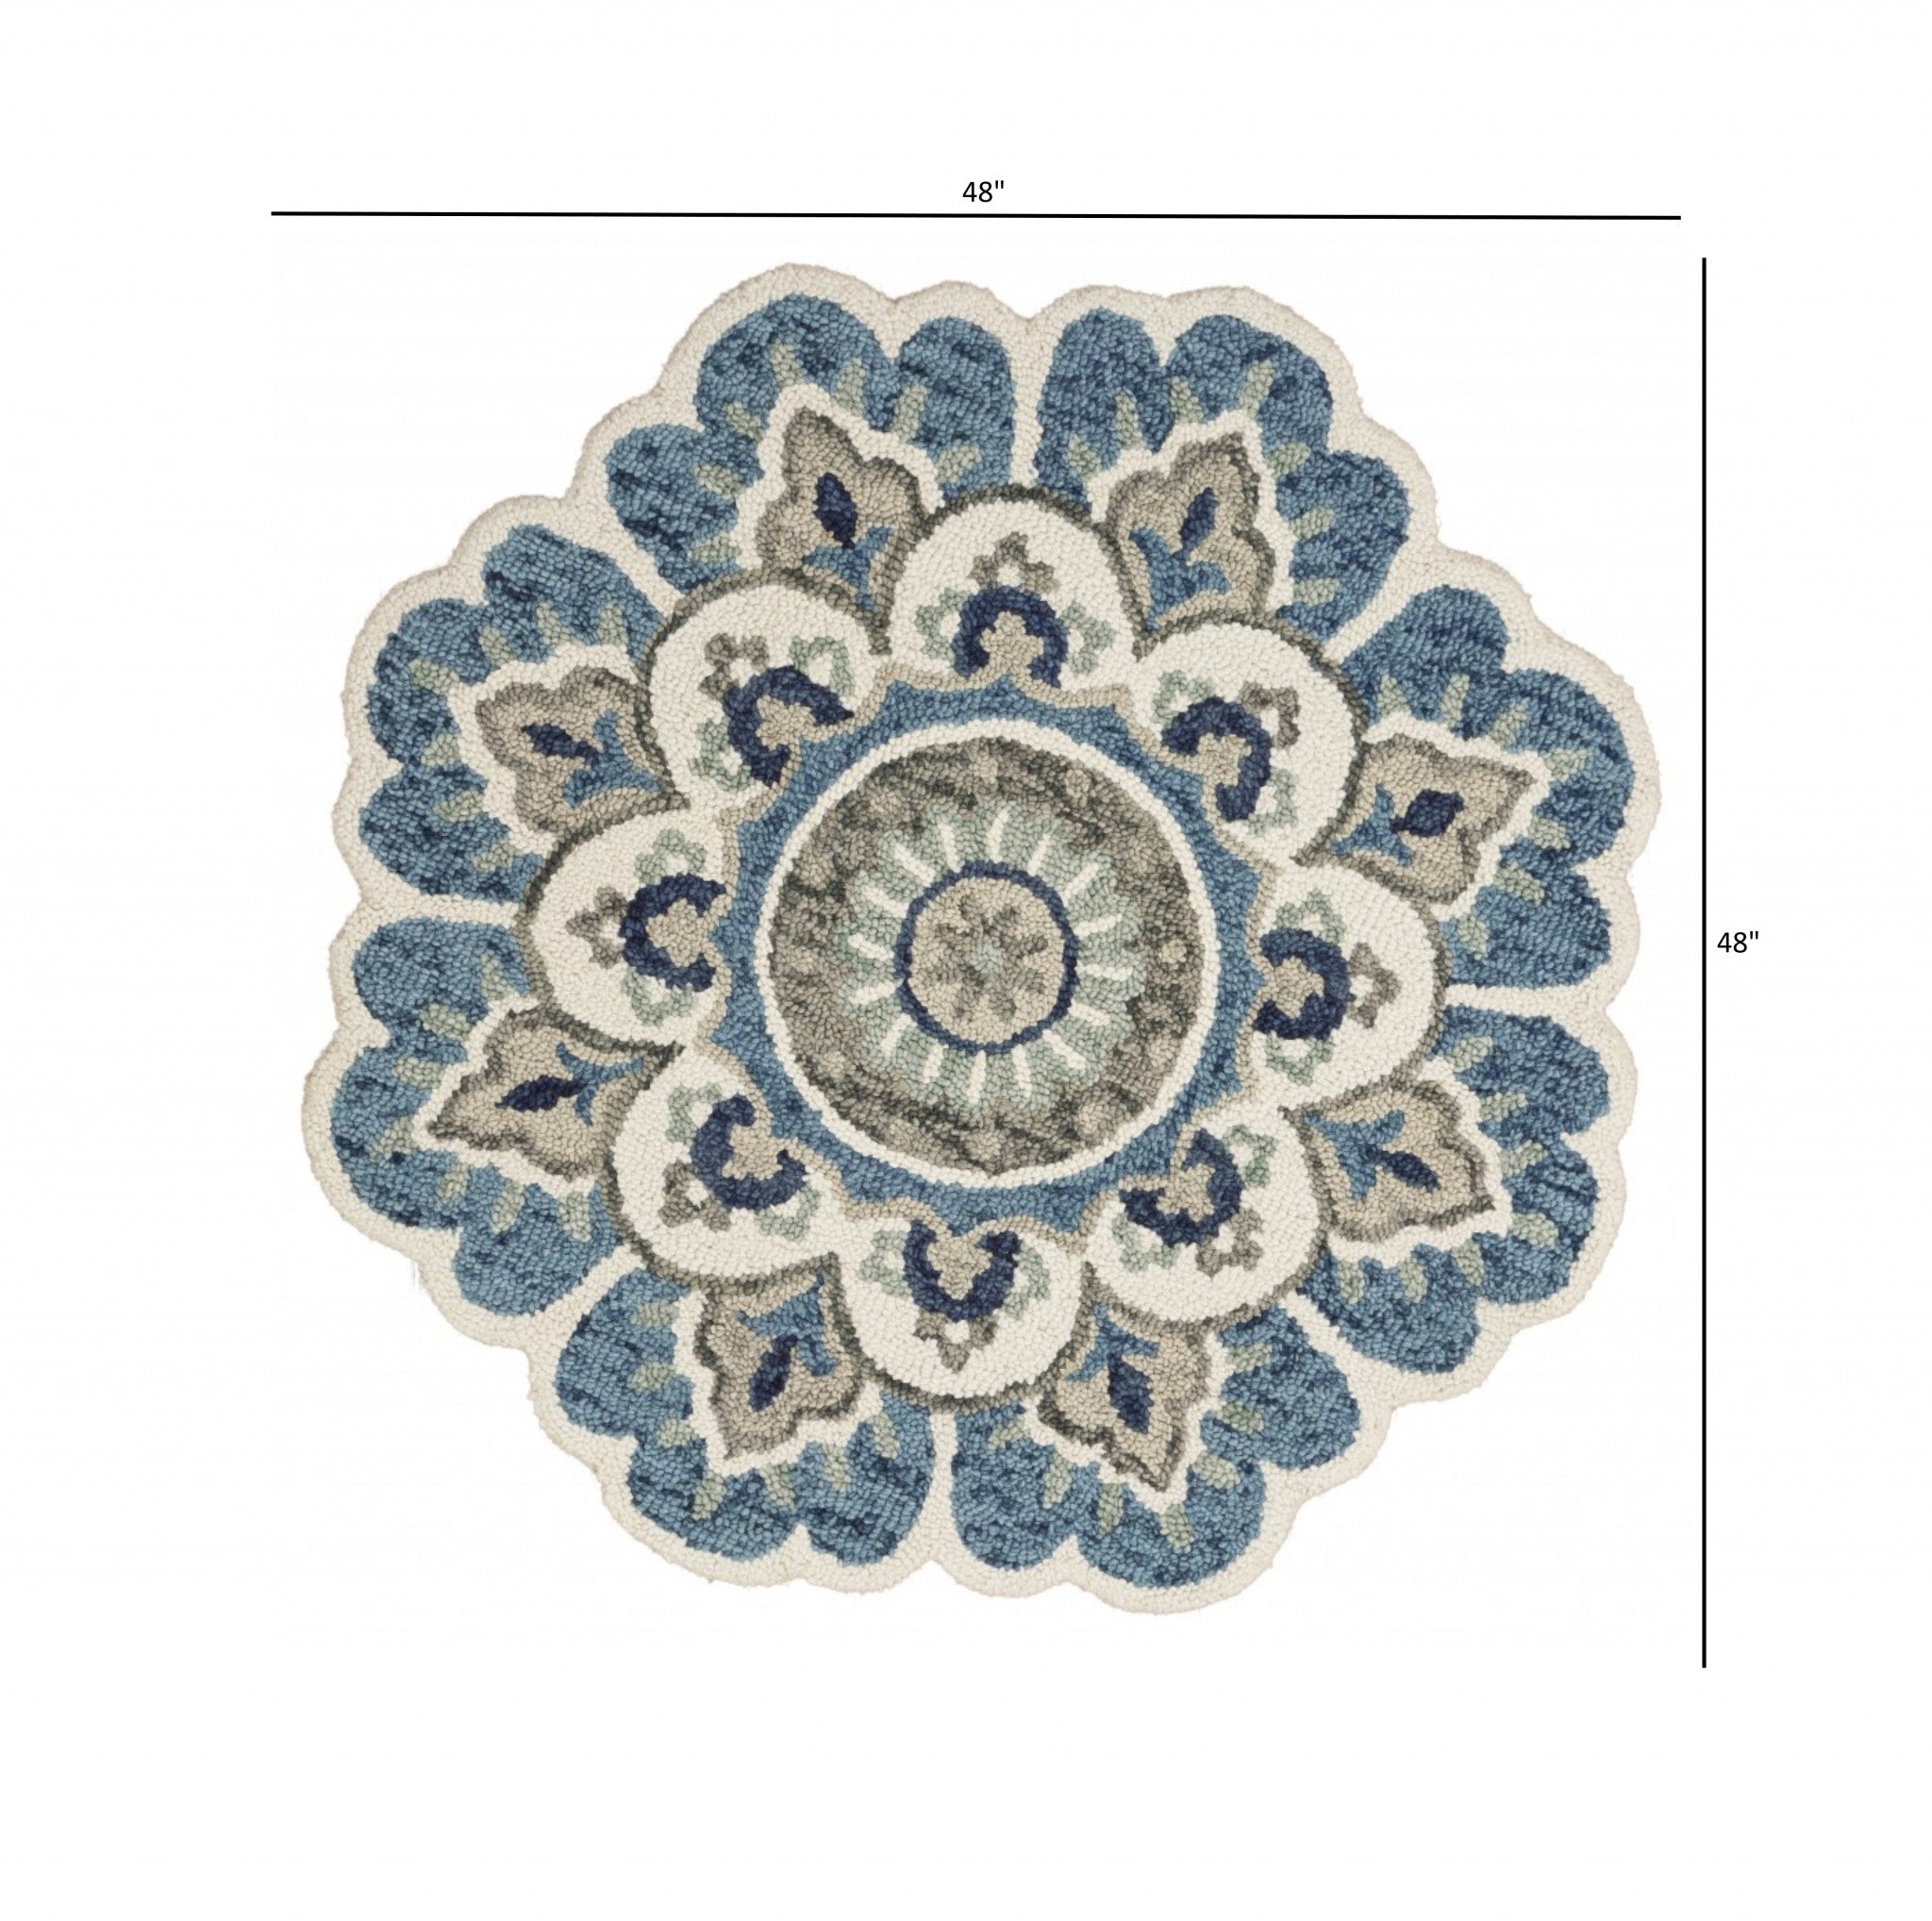 4’ Round Blue Modern Floral Area Rug